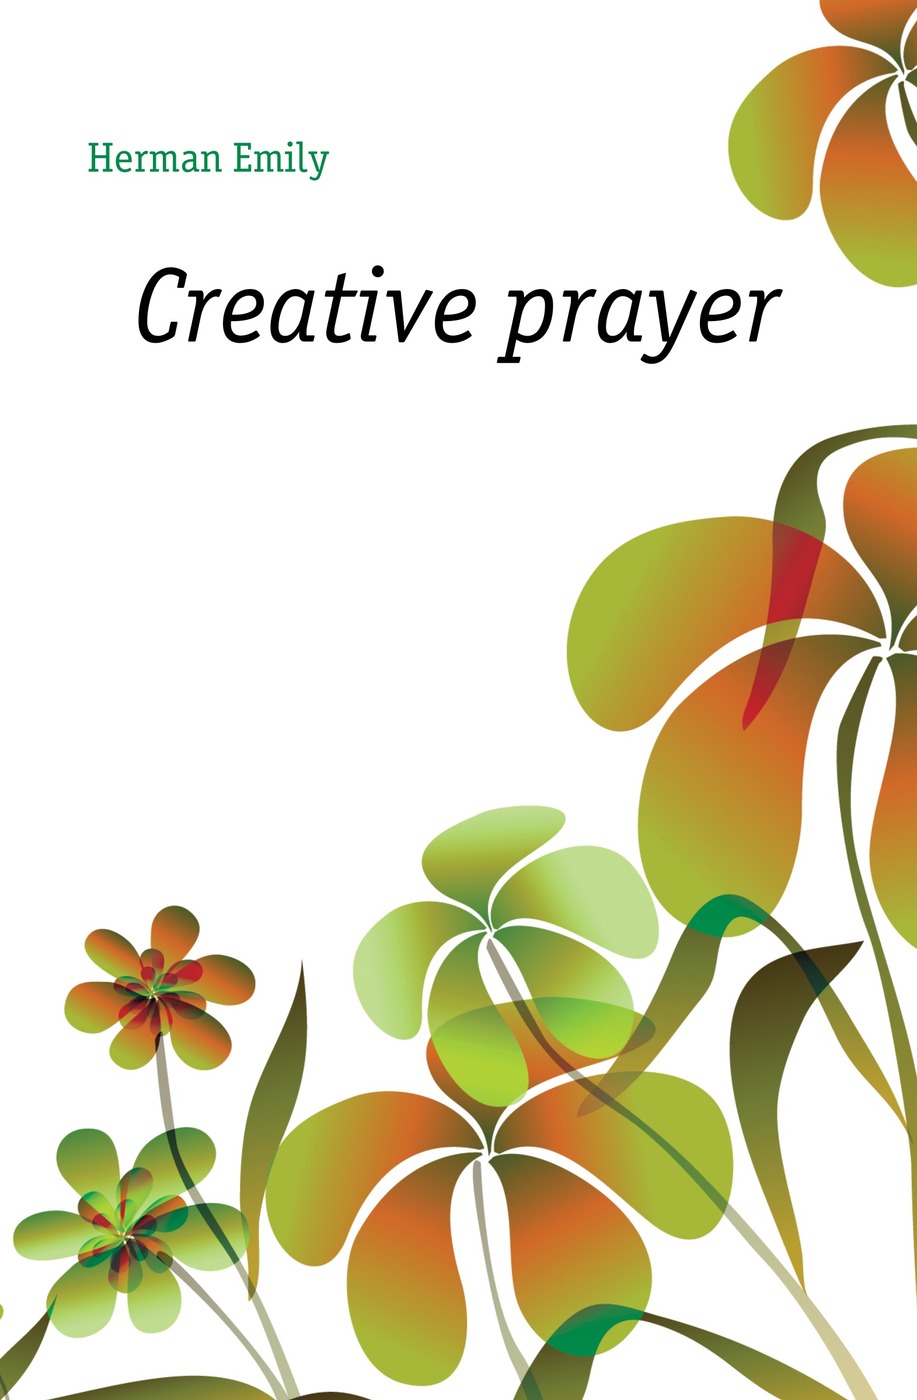 Creative prayer